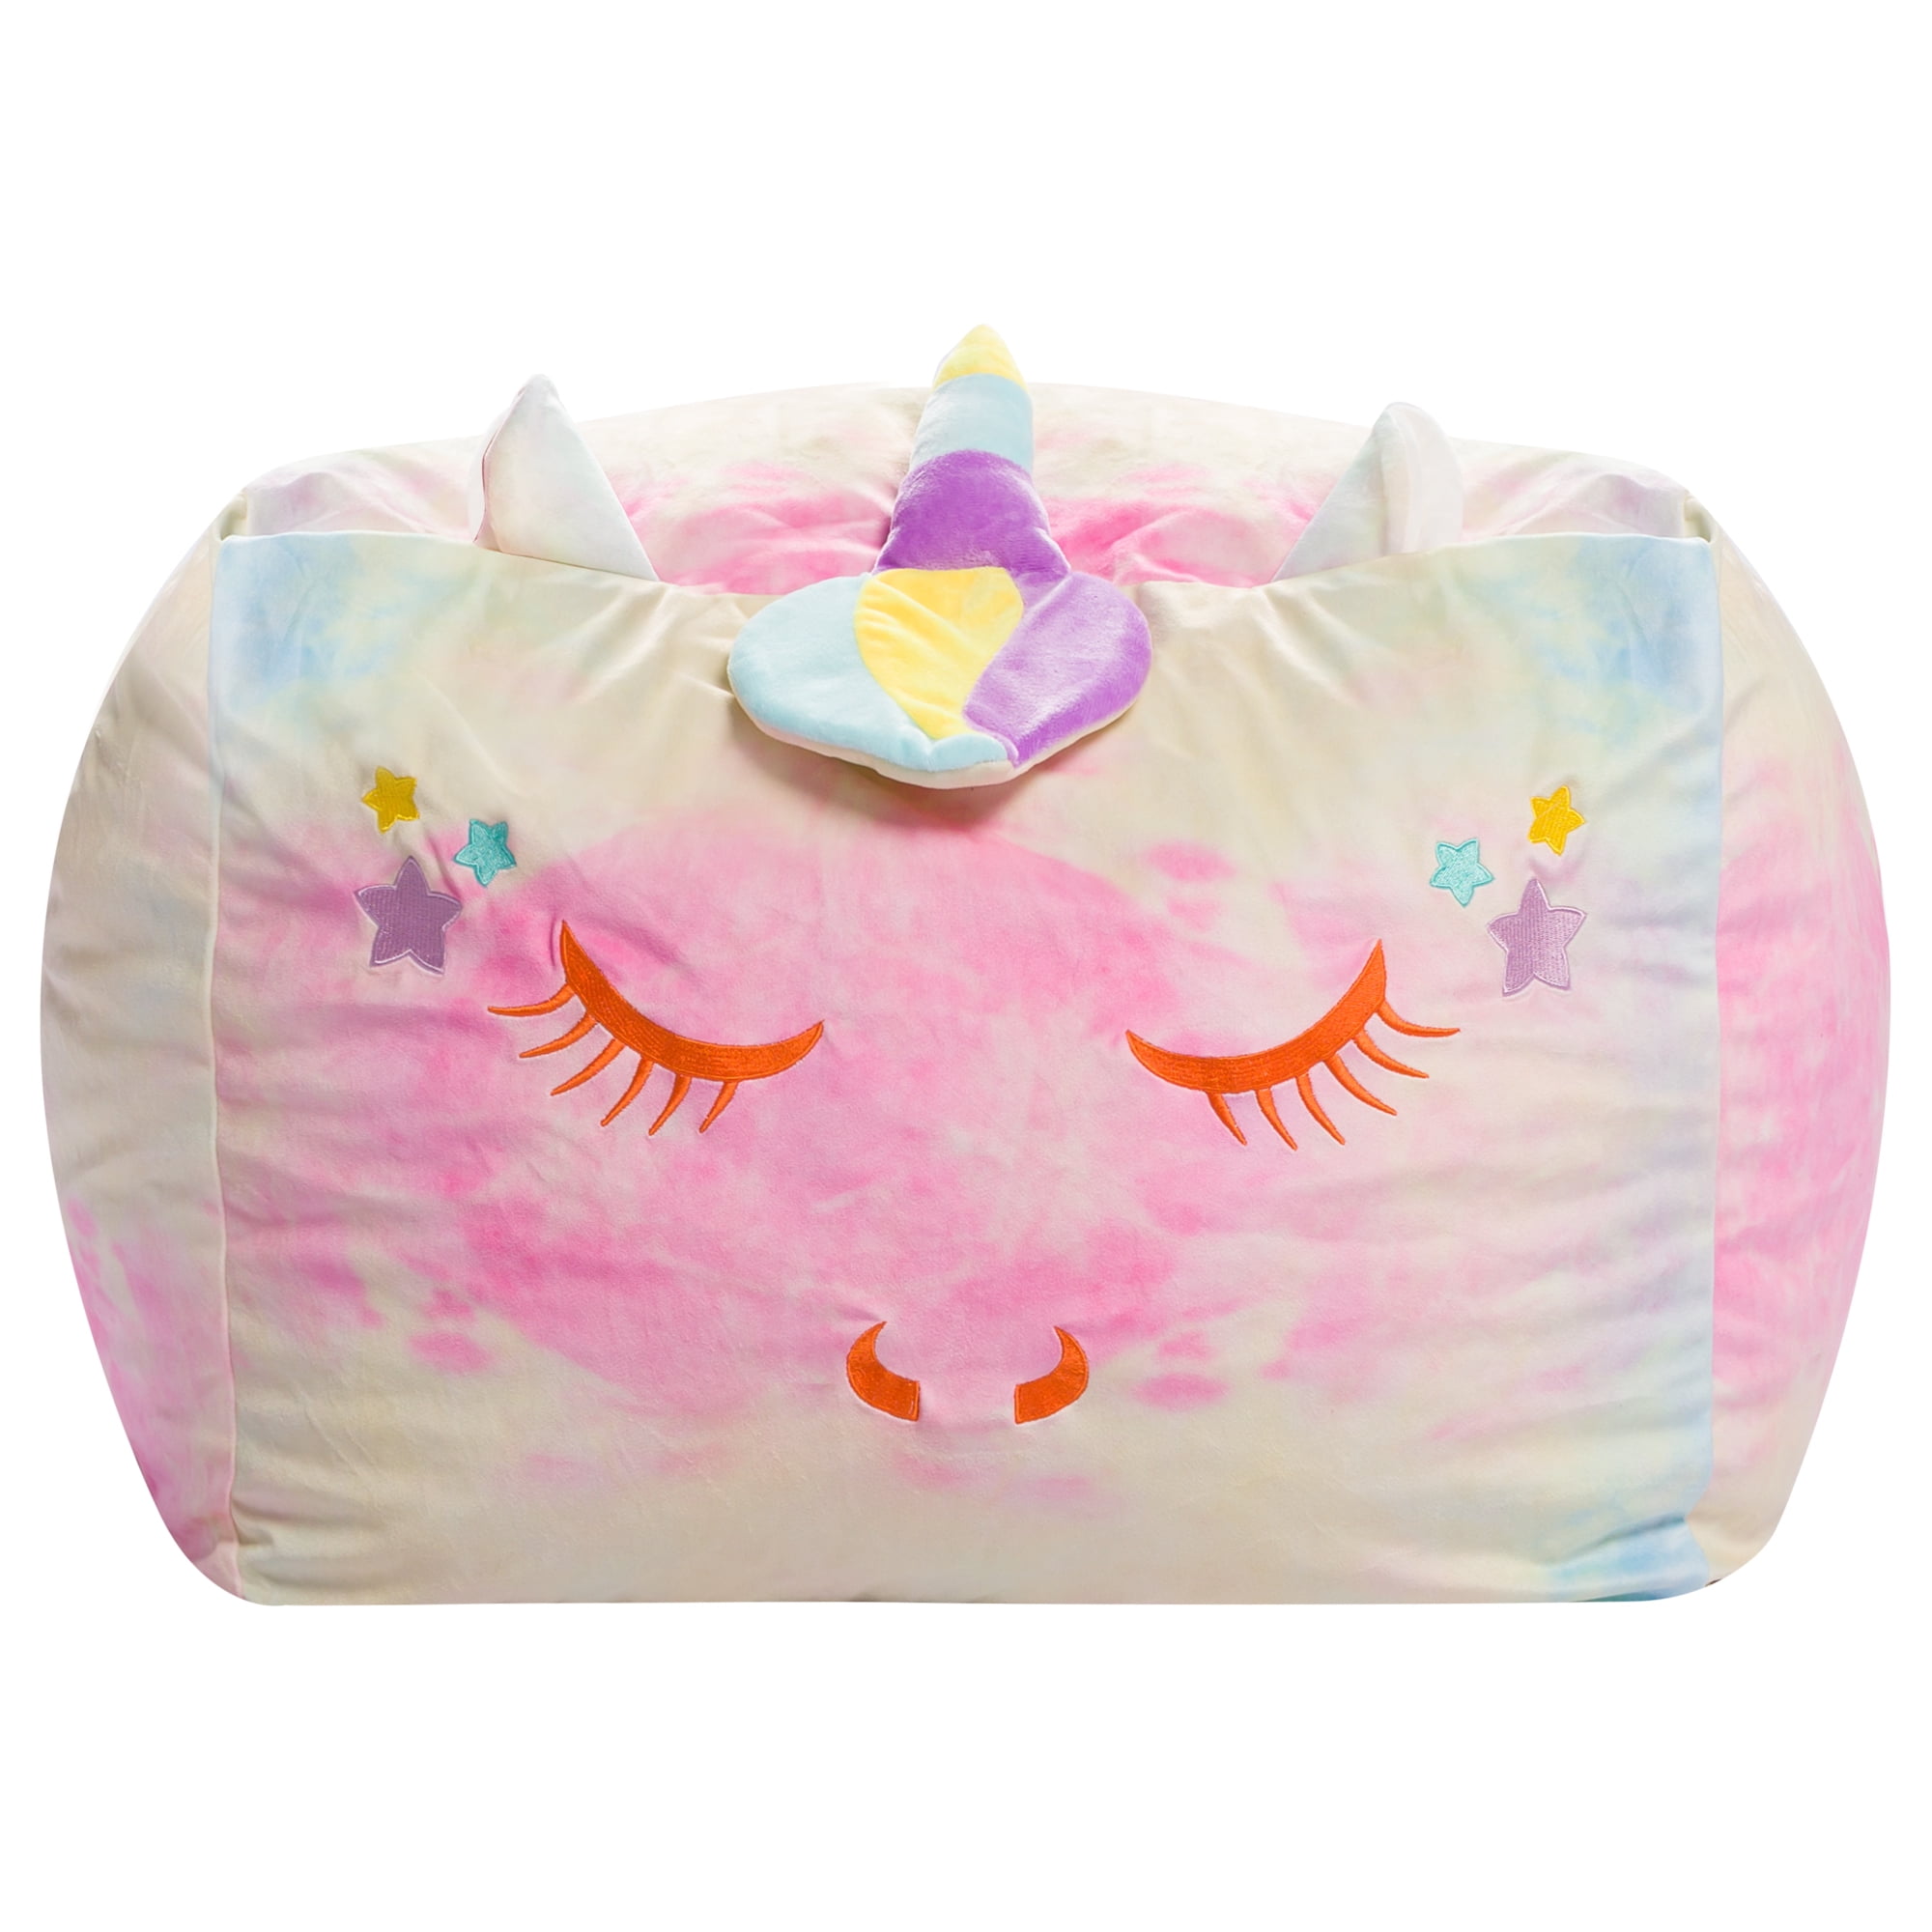 Playroom Toy Storage Bag for Toddler Adults 53 Premium Large Stuffed Animal Storage Bean Bag Convetu Kids Bean Bag Chair